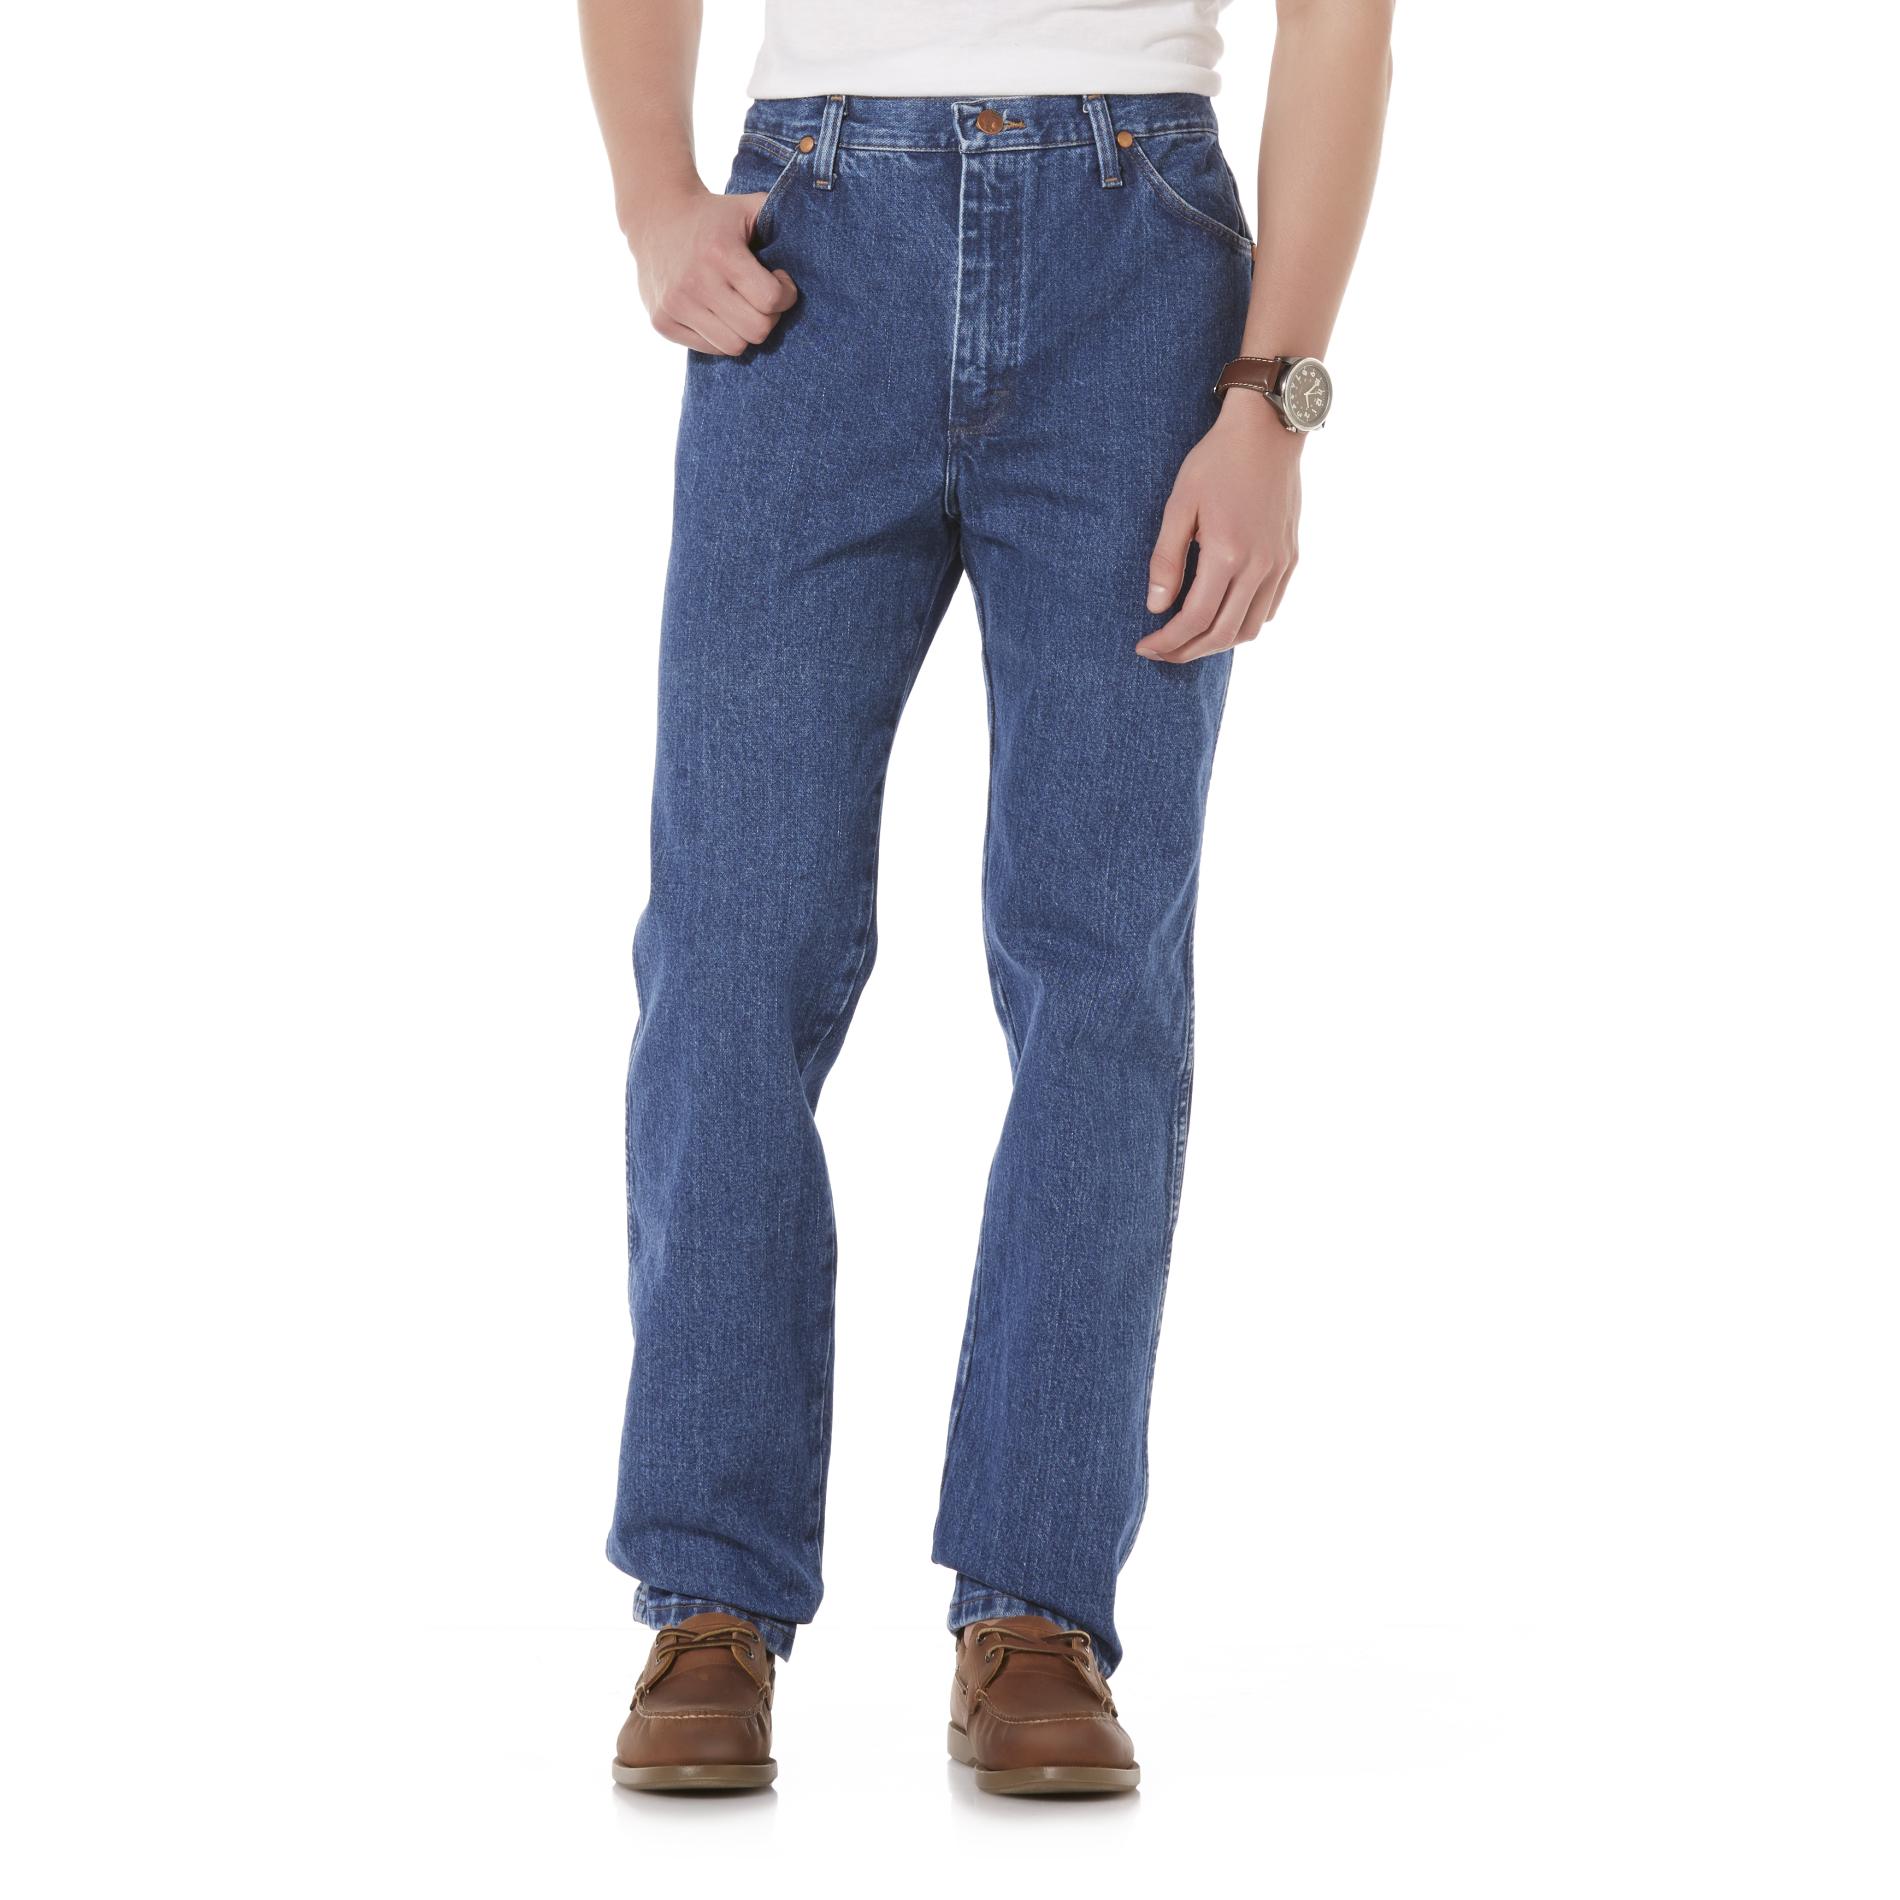 wrangler colored jeans mens